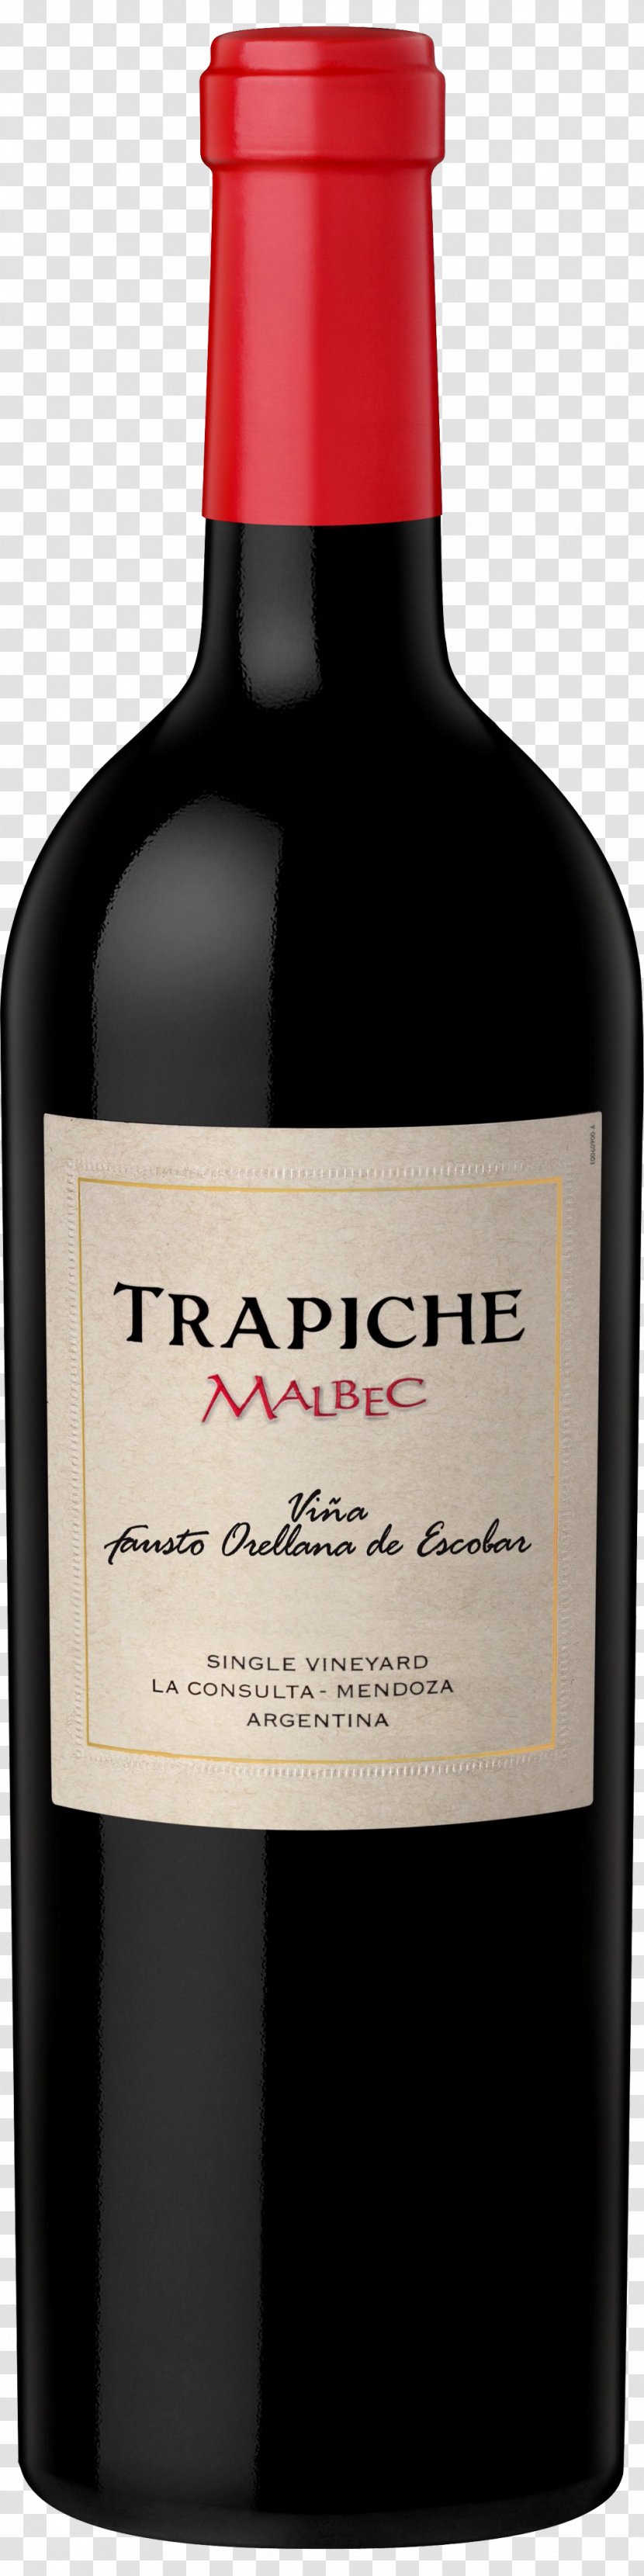 Wine Bessou Bertrand Malbec Trapiche Cabernet Sauvignon - Bottle Transparent PNG